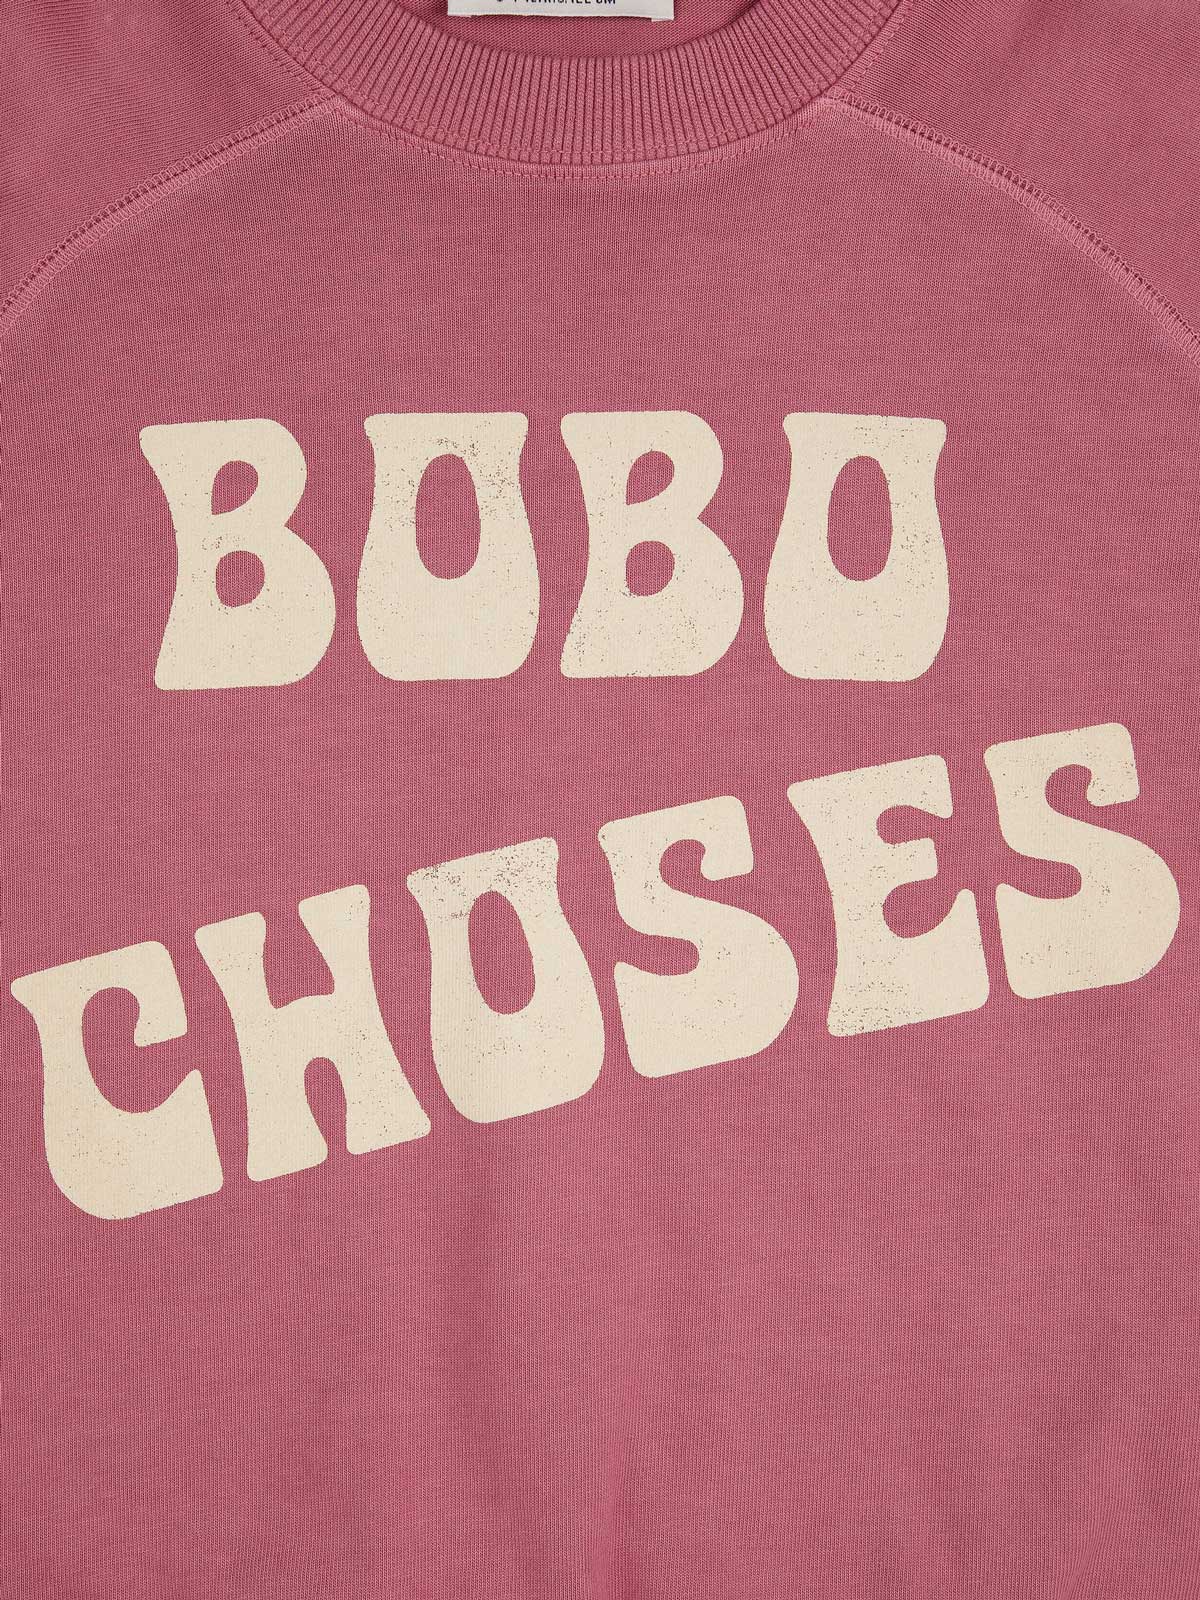 Bobo Choses 티셔츠